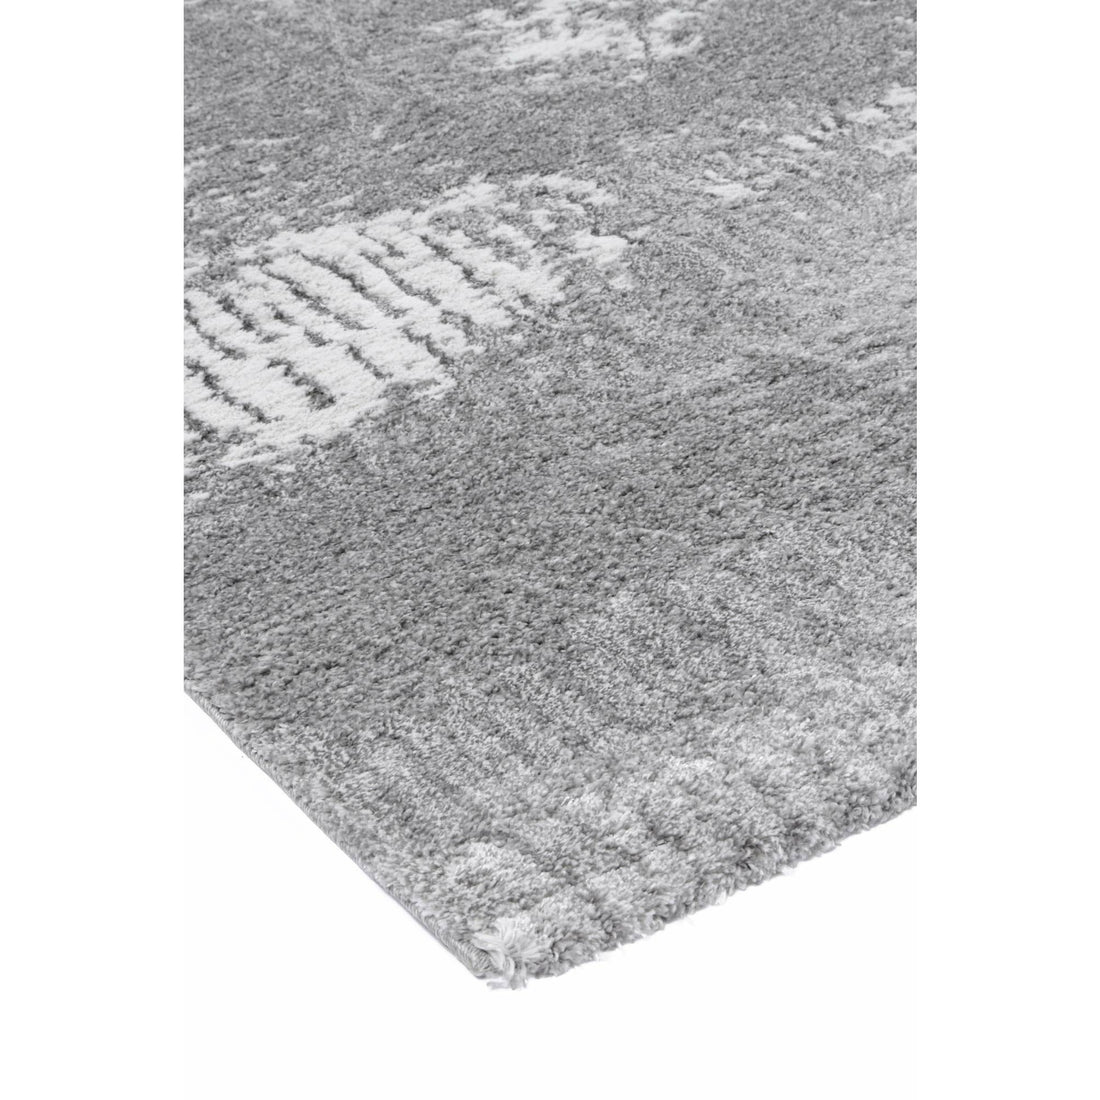 Yuzil Grey Abstract Rug 240x330cm